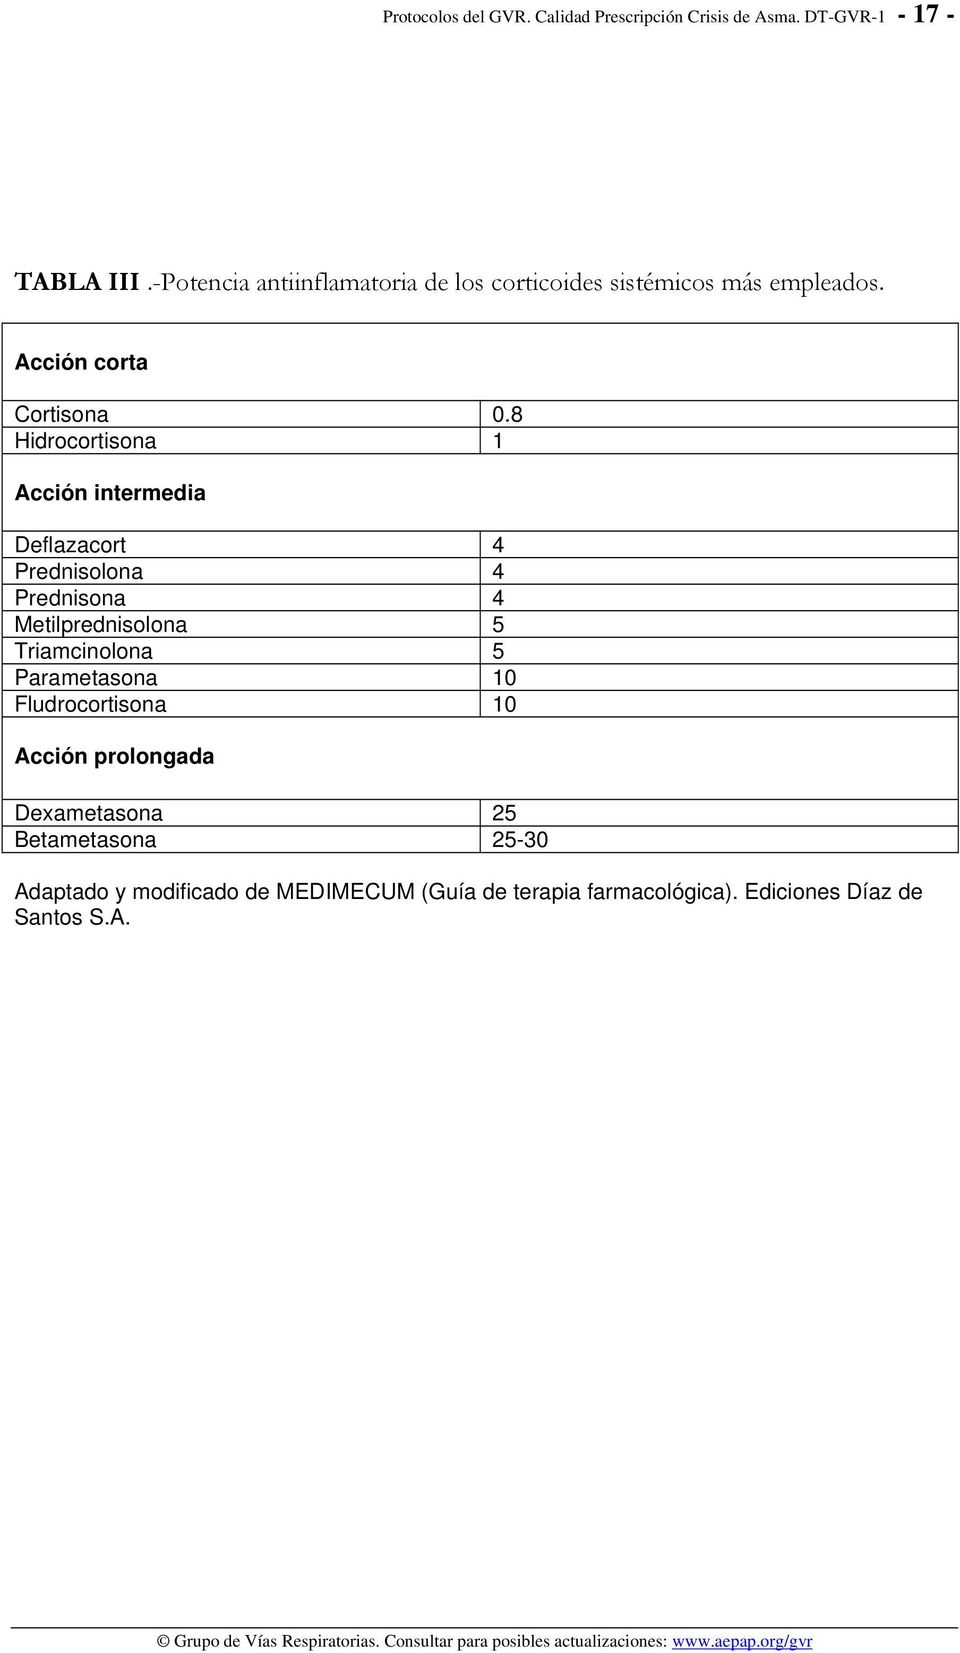 8 Hidrocortisona 1 Acción intermedia Deflazacort 4 Prednisolona 4 Prednisona 4 Metilprednisolona 5 Triamcinolona 5